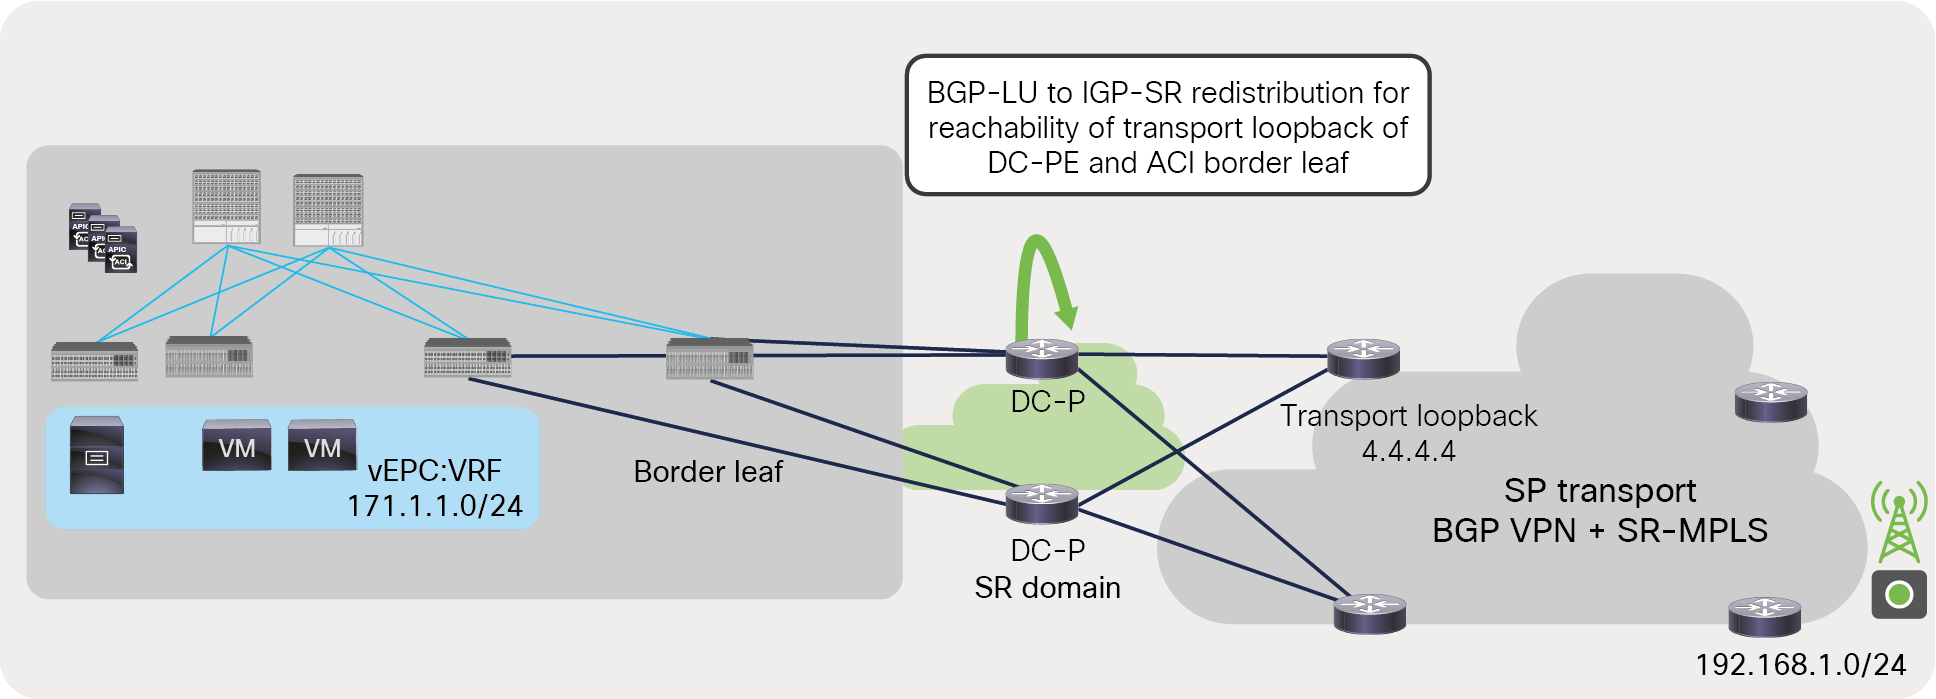 BGP-LU to IGP-SR redistribution